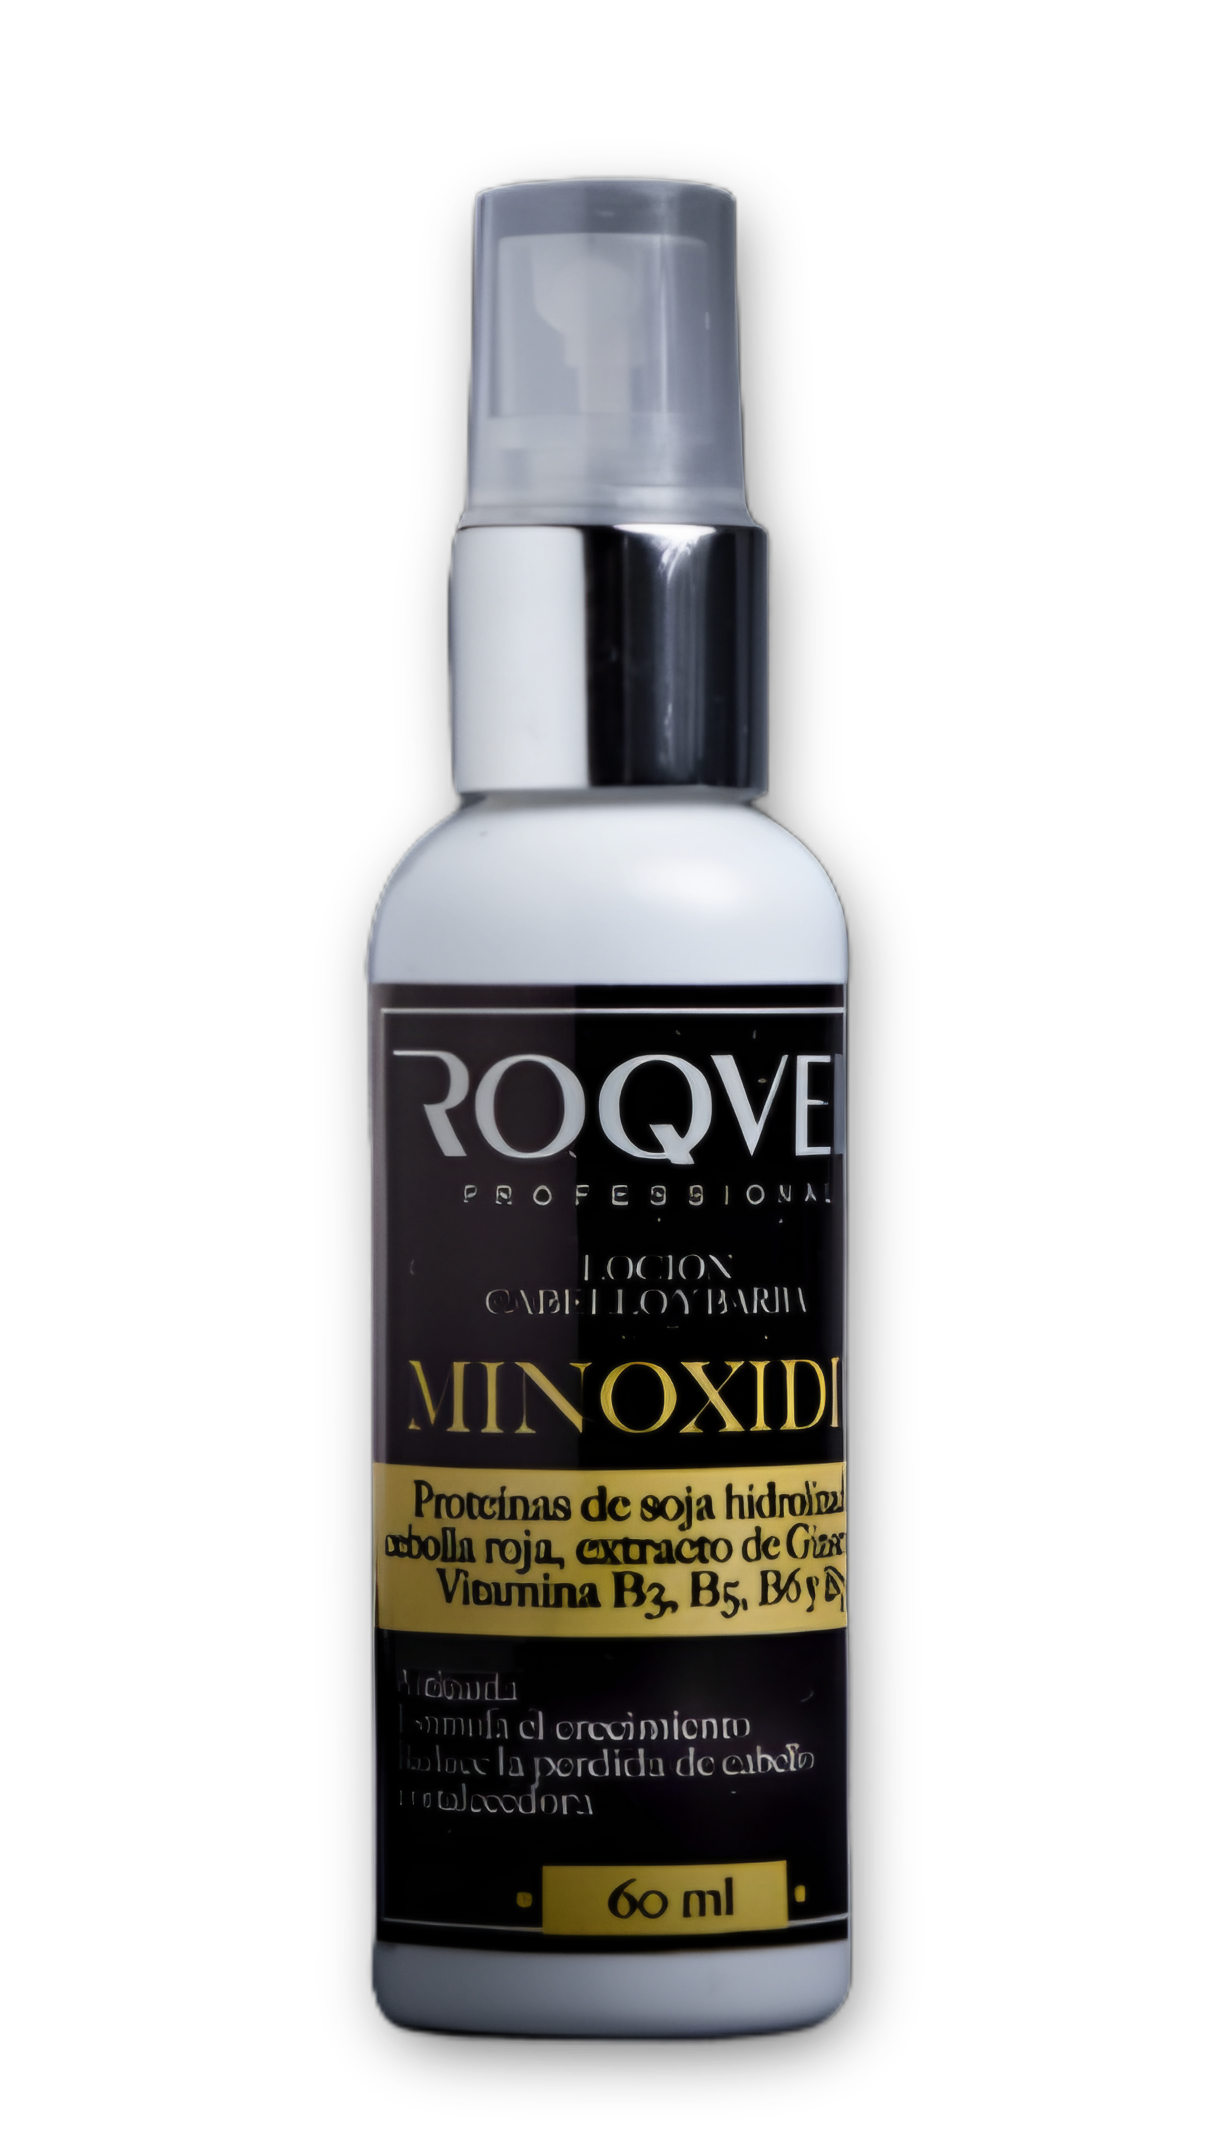 Minoxidil 5% Roqvel Professional